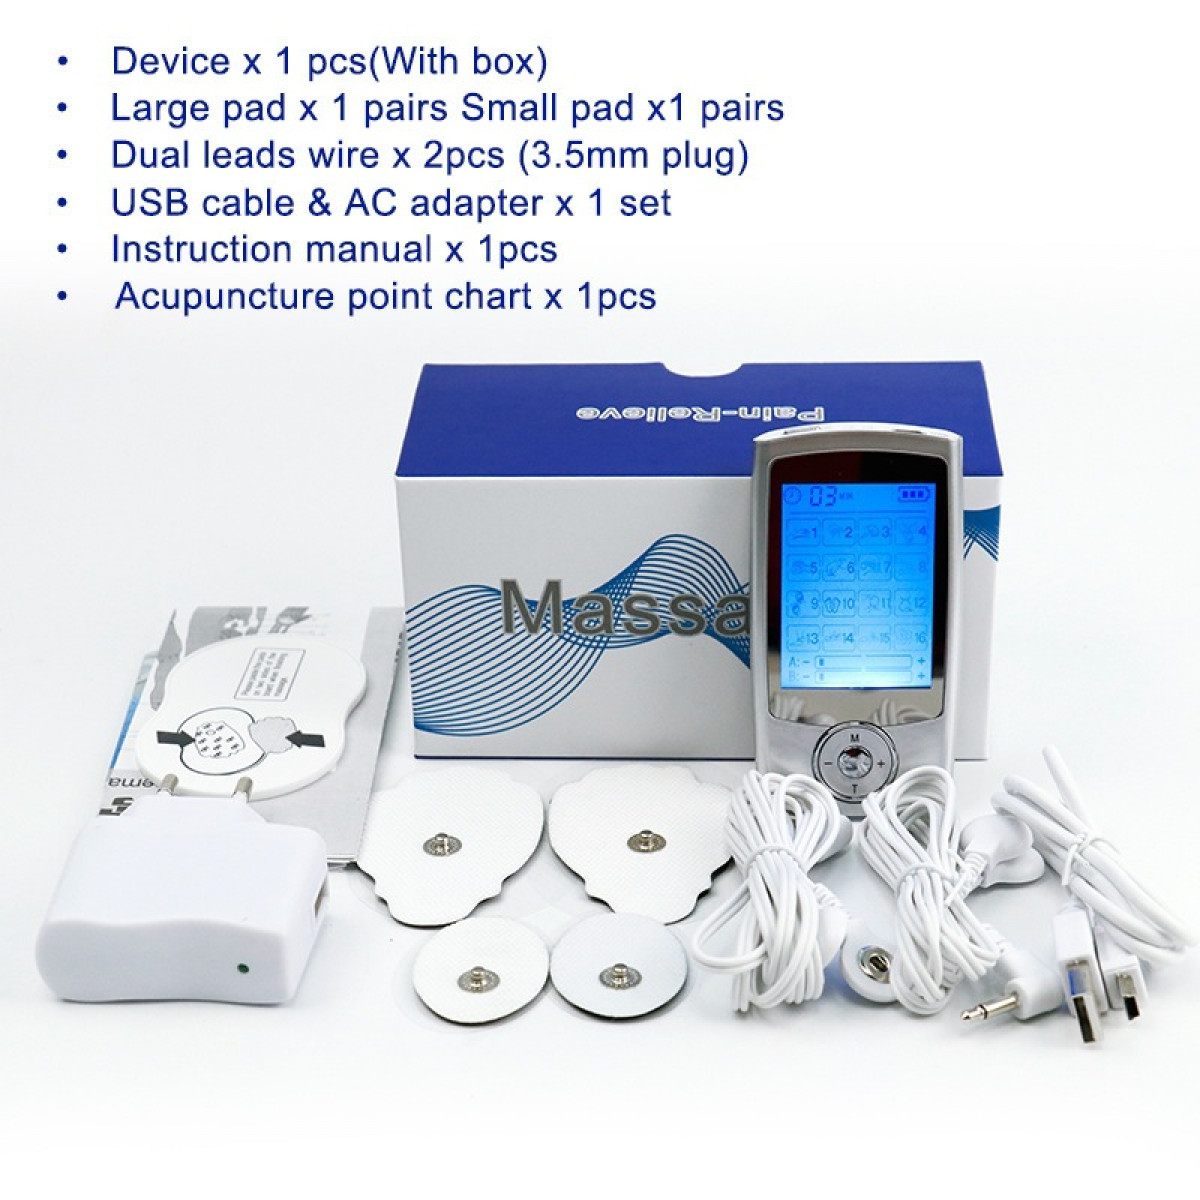 INF TENS-Gerät EMS-Muskelstimulator mit 16 Massagegerät Massagemodi